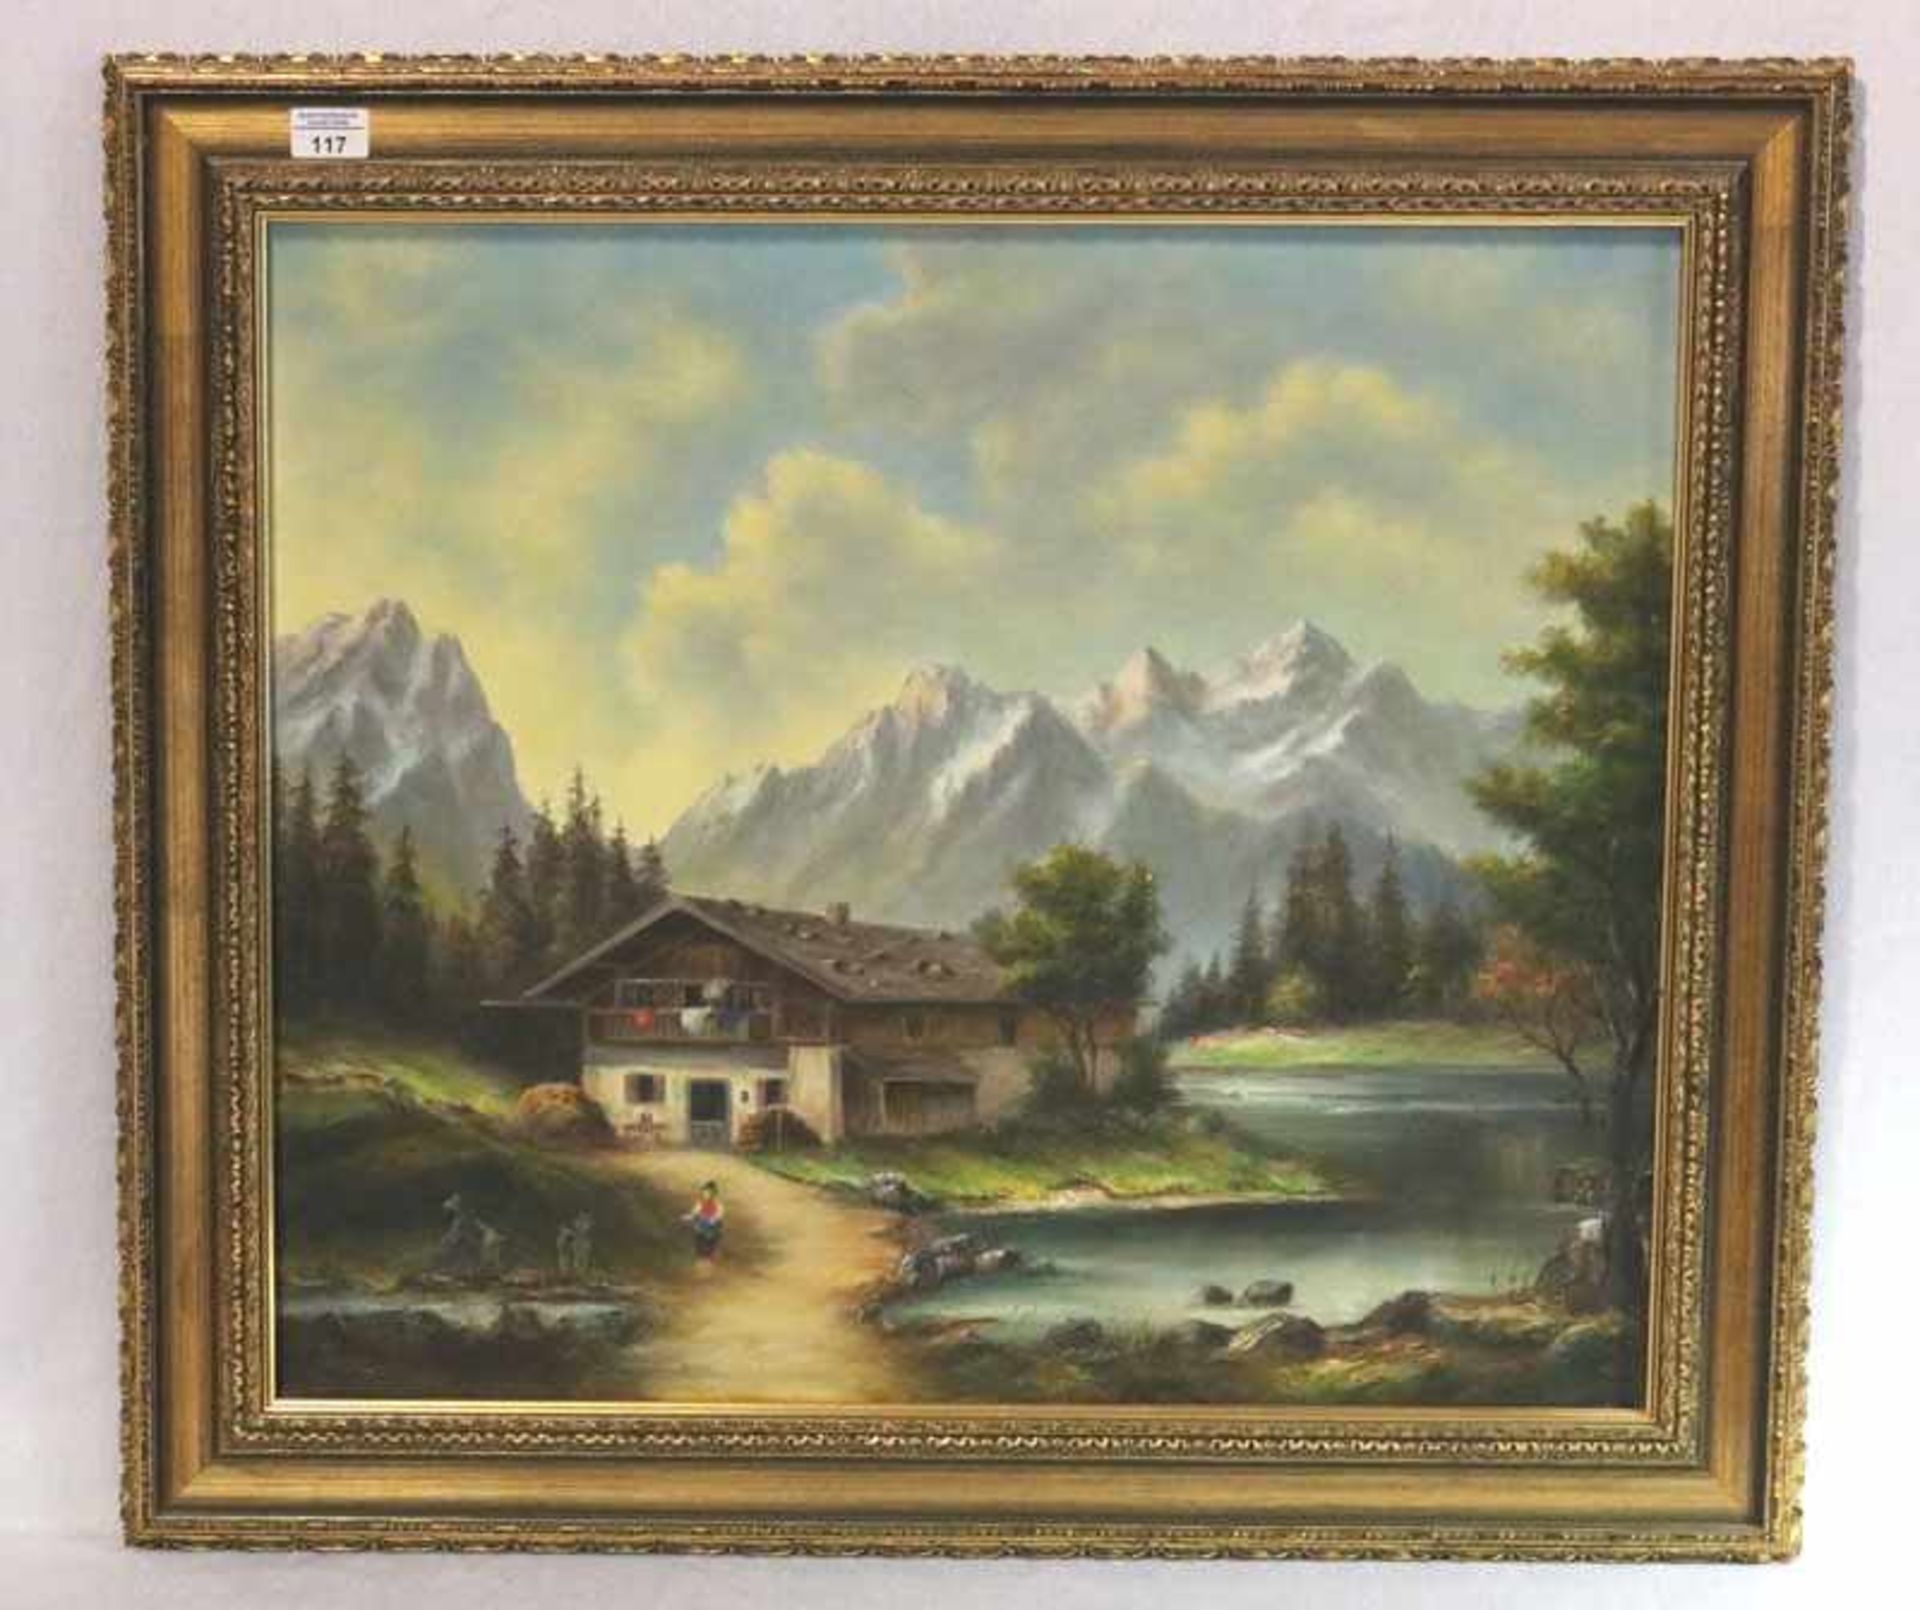 Gemälde ÖL/LW 'Gebirgslandschaft mit Bauernhaus', gerahmt, incl. Rahmen 75 cm x 85 cm